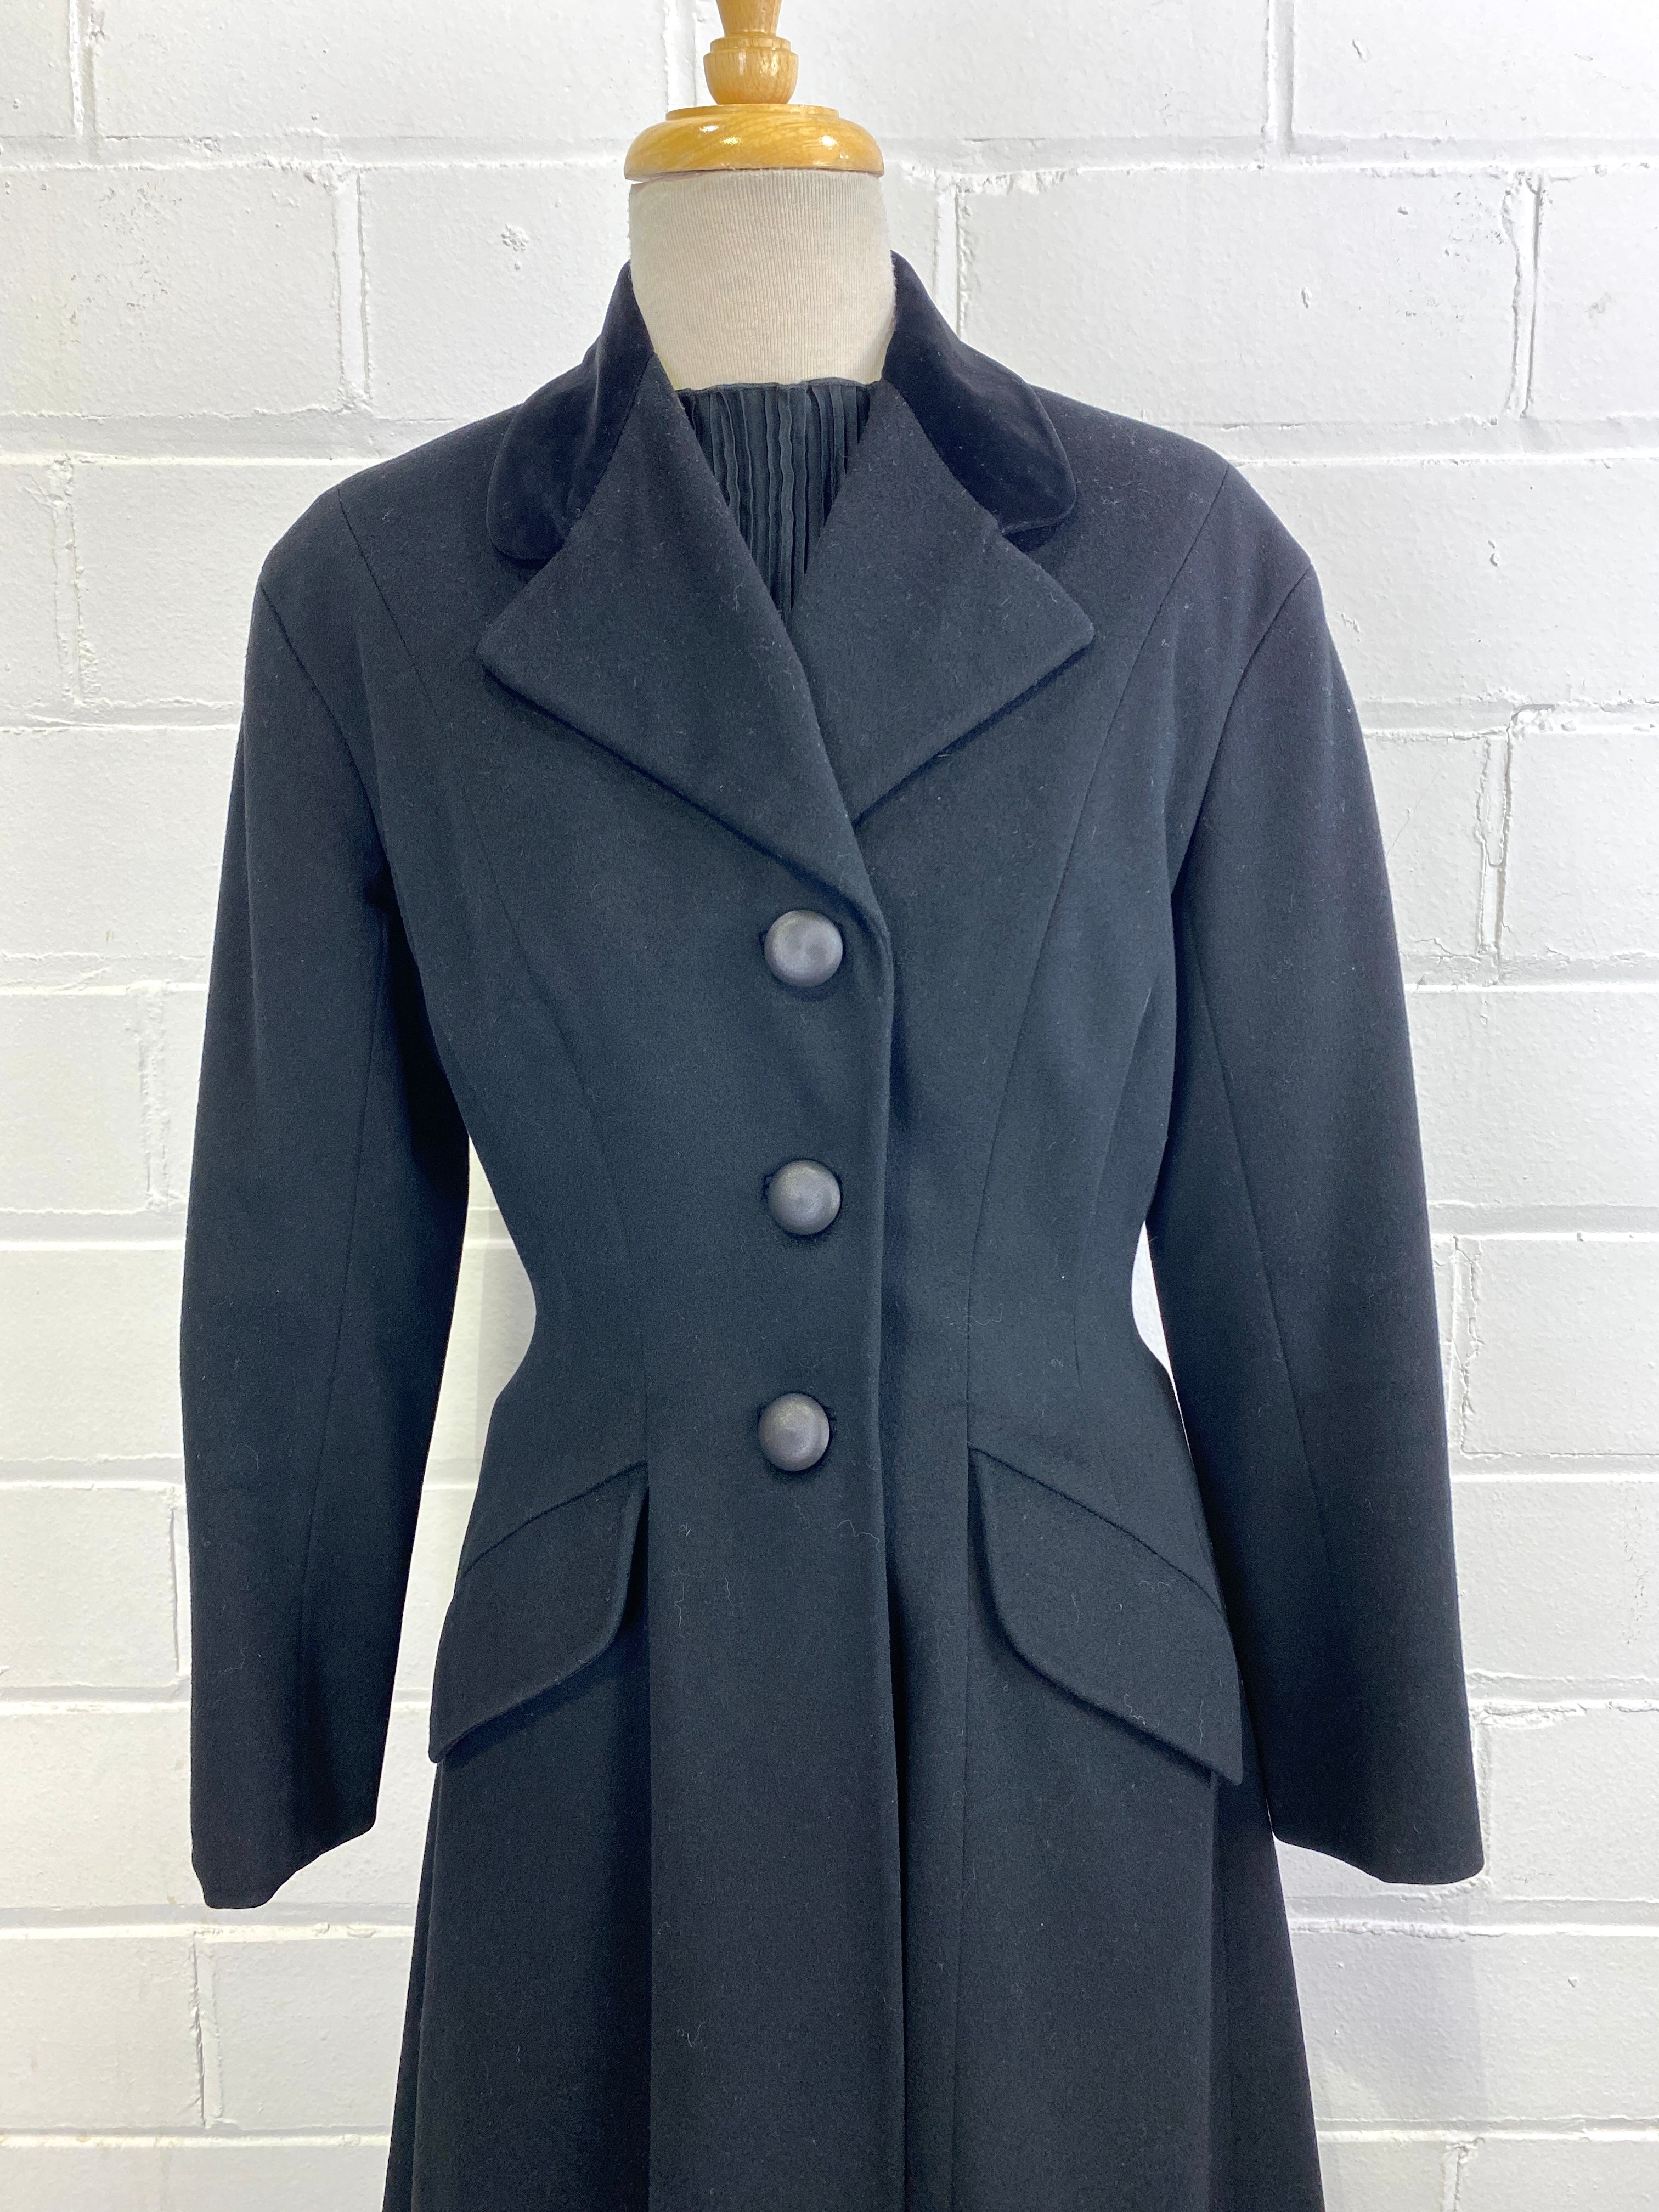 Vintage 1950s Black Wool Princess Dress Coat, Harrod's, XS-S